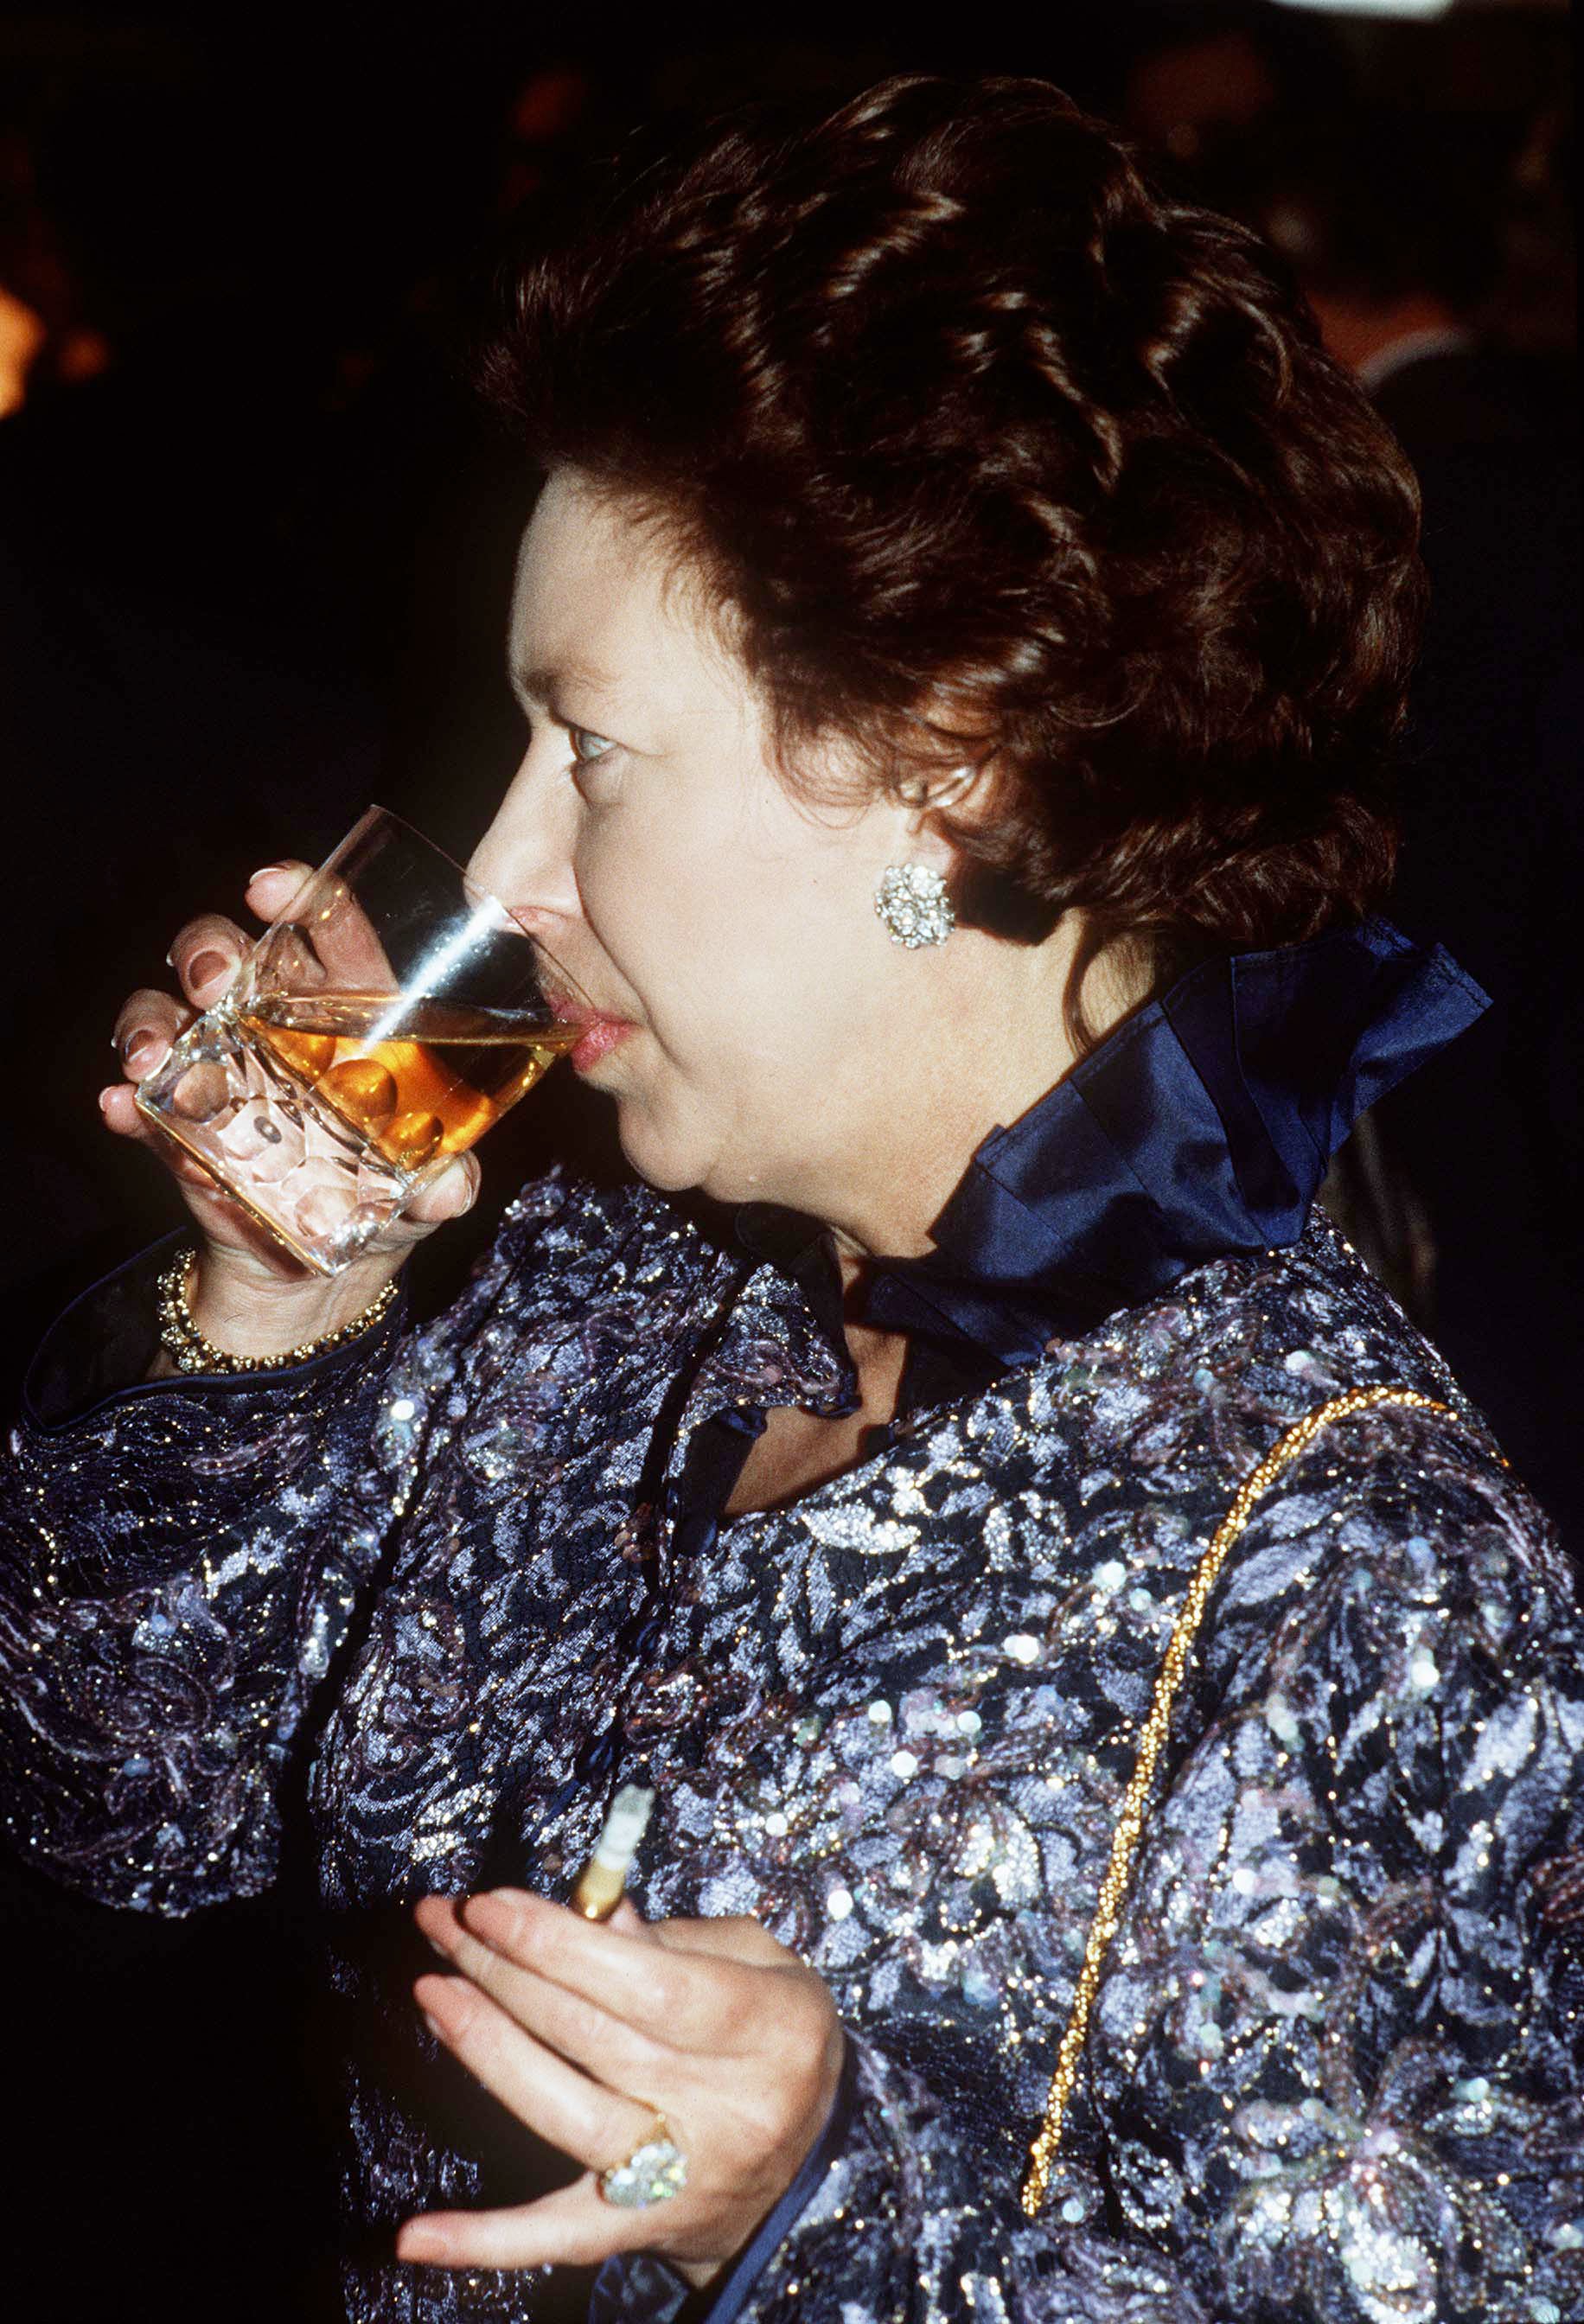 Princess Margaret 